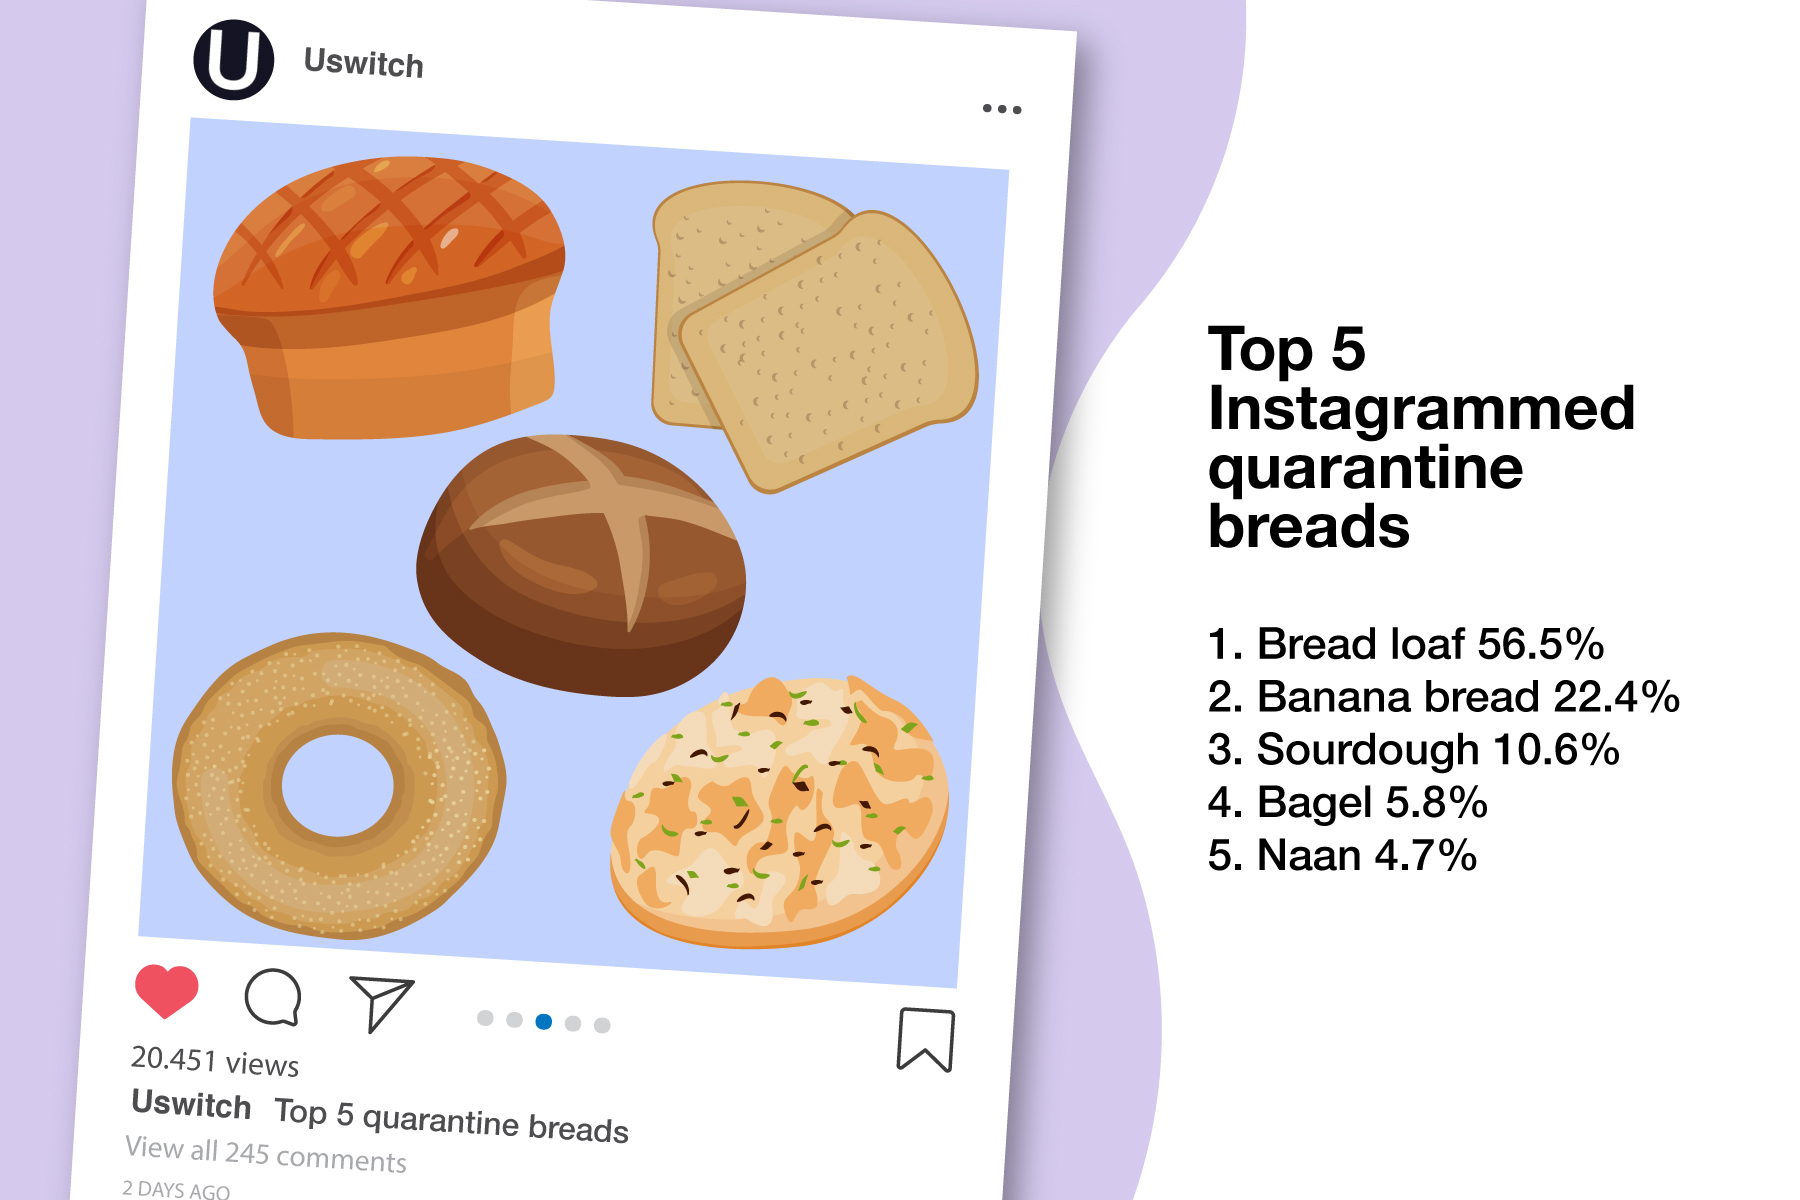 Instagrammed breads